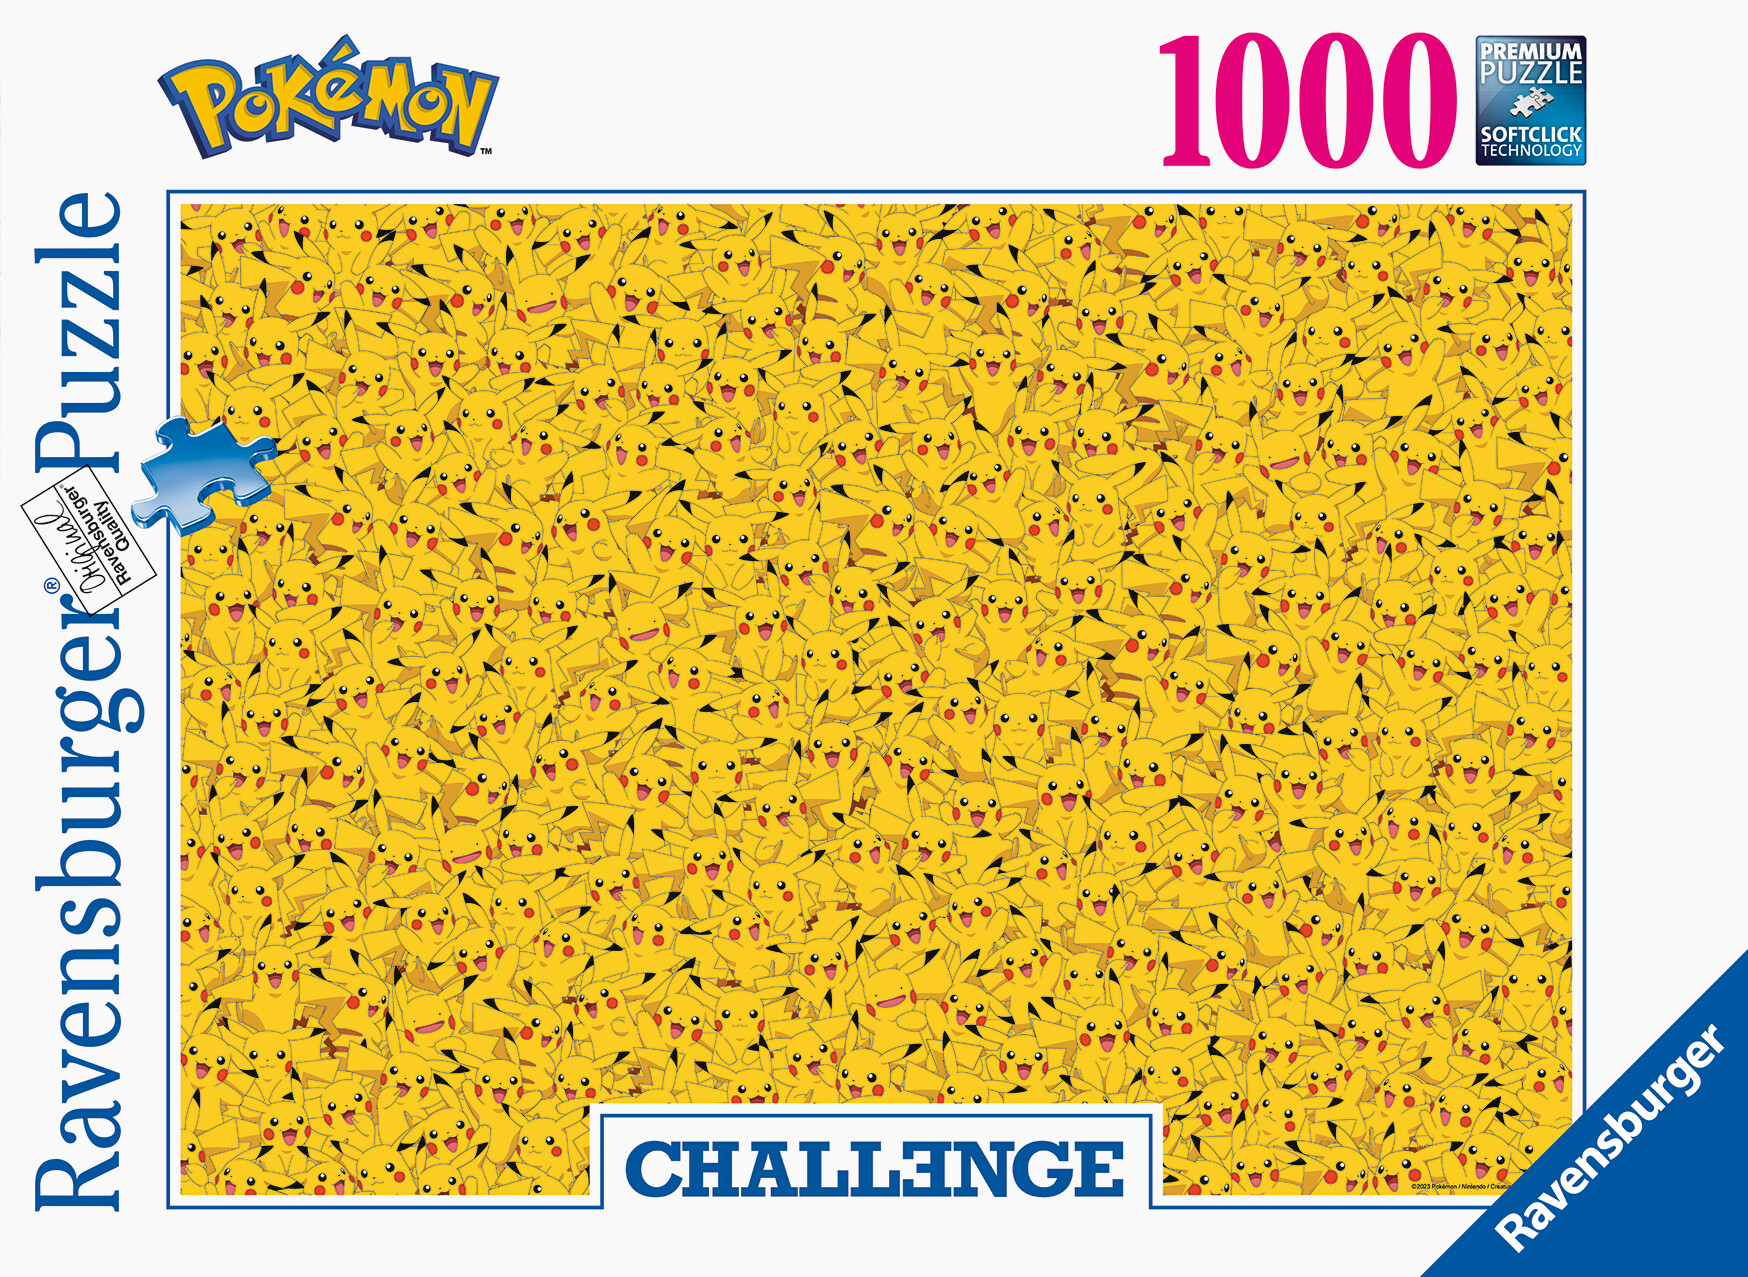 Ravensburger - puzzle pikachu challenge, 1000 pezzi, puzzle adulti - POKEMON, RAVENSBURGER